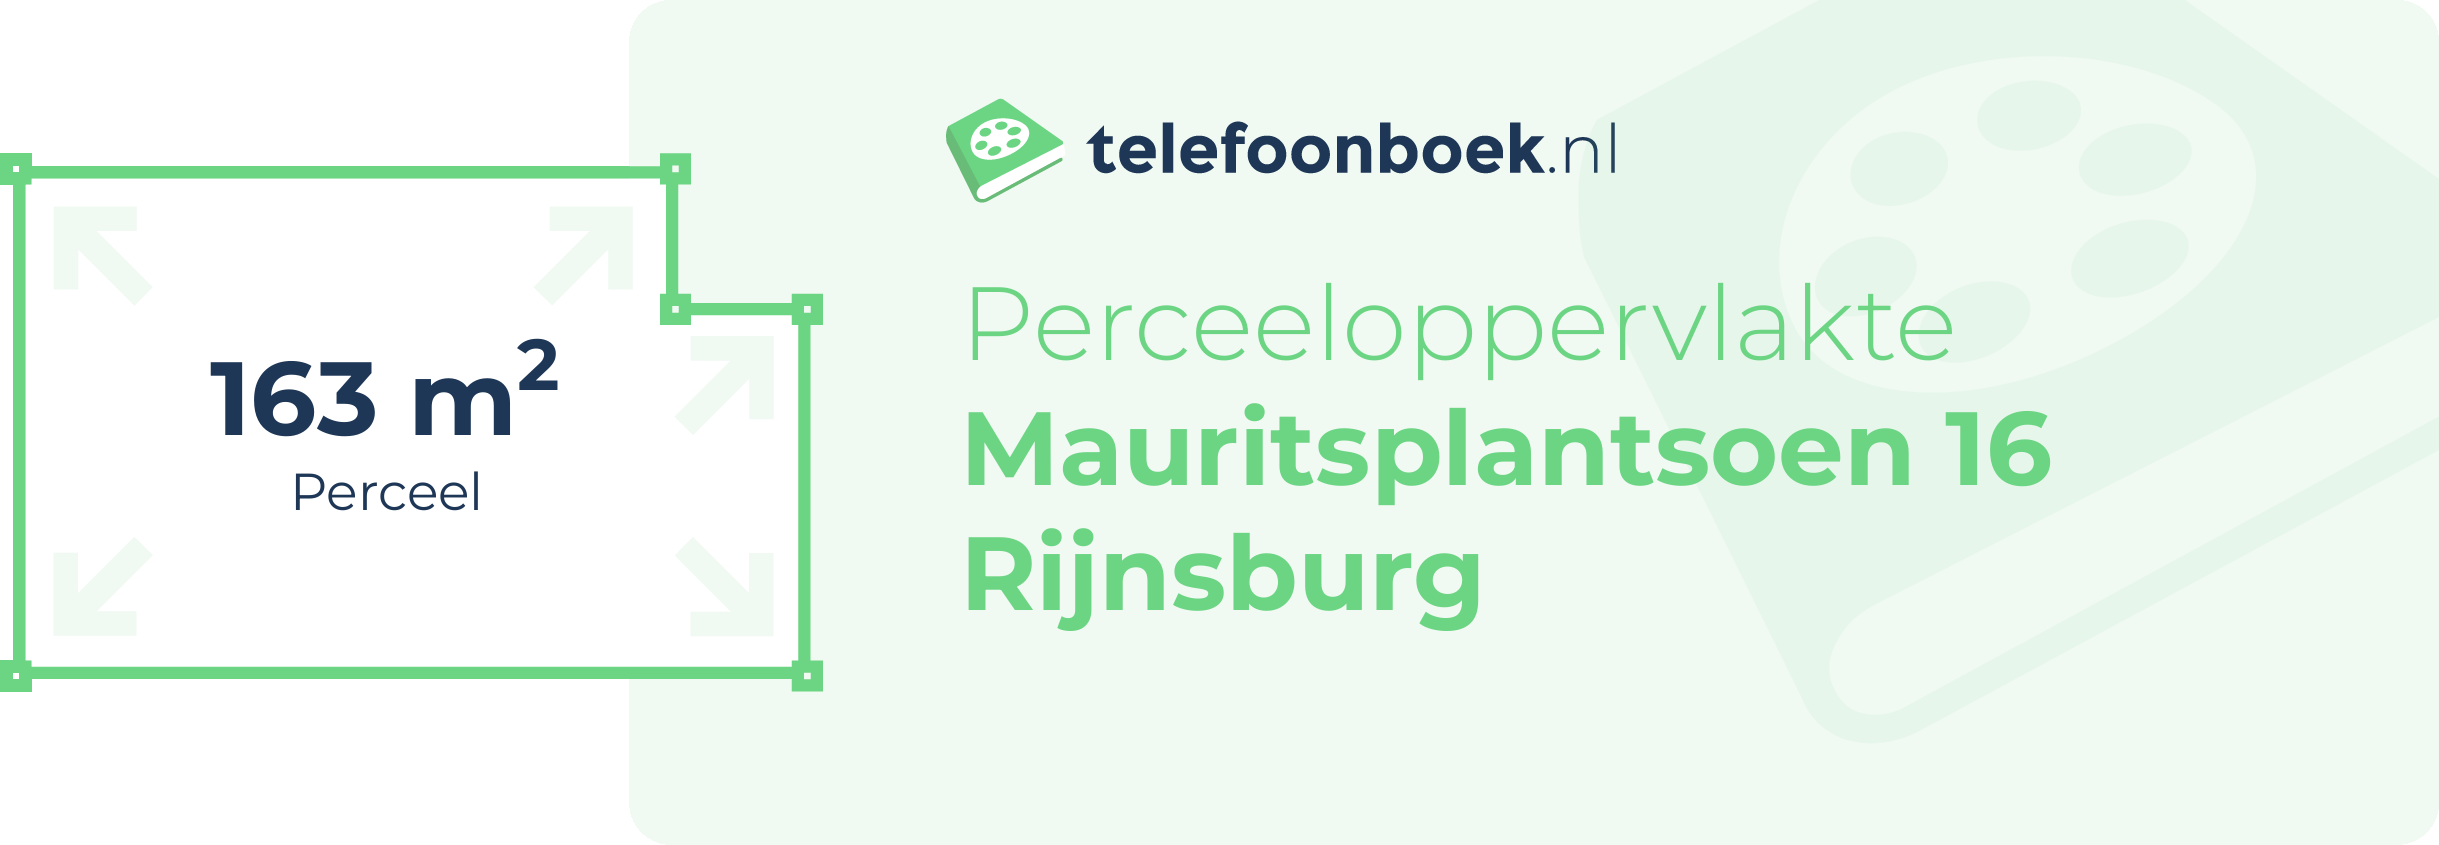 Perceeloppervlakte Mauritsplantsoen 16 Rijnsburg